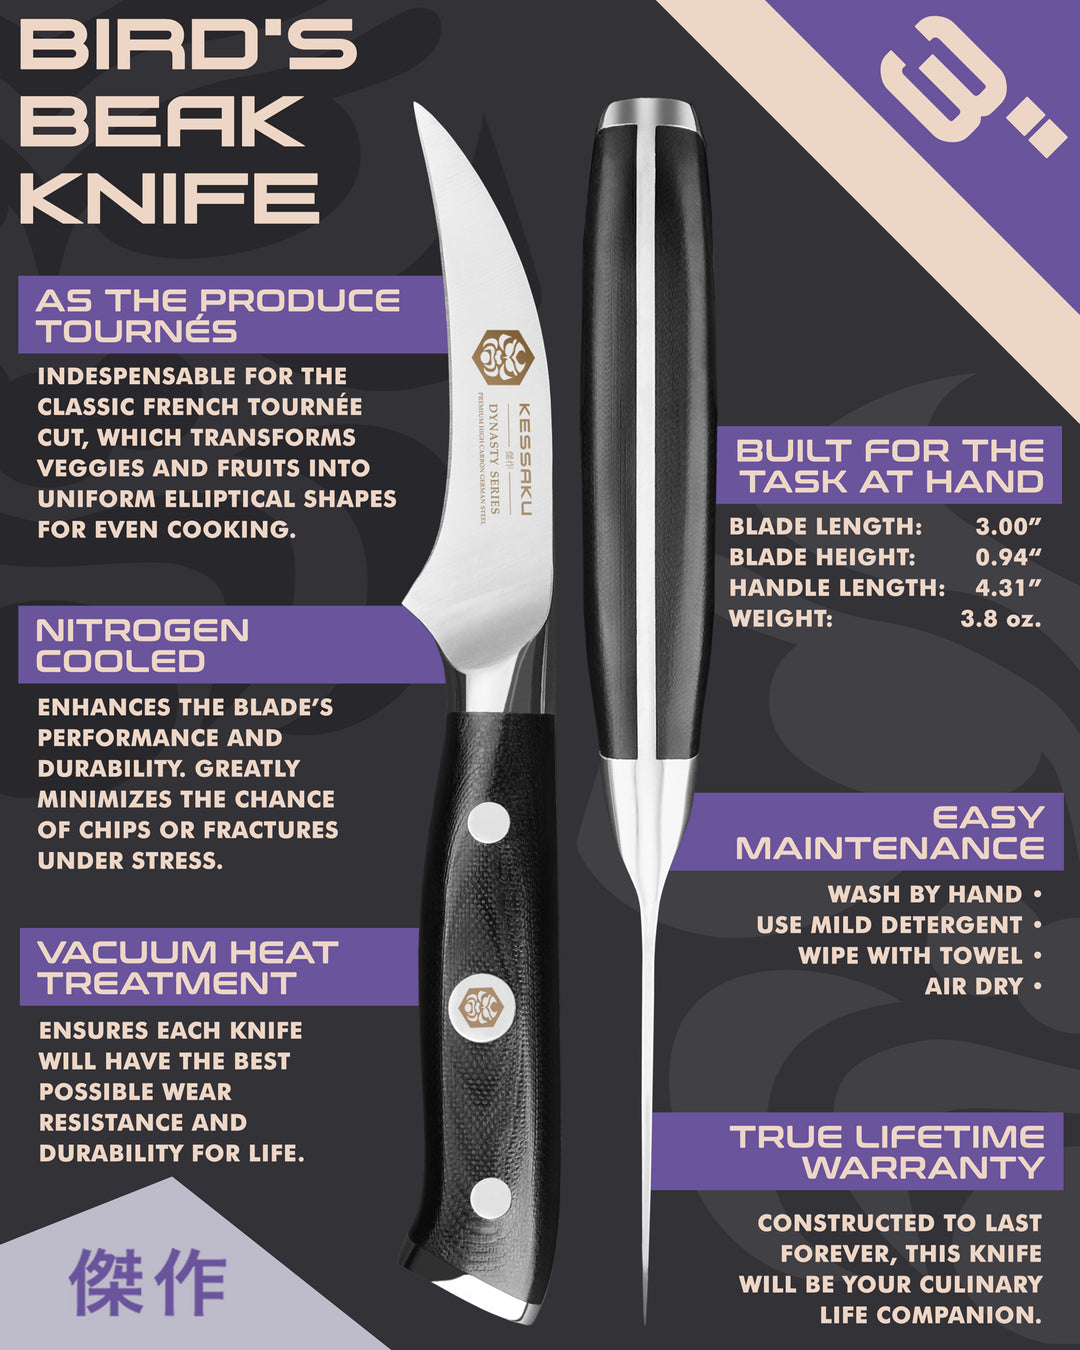 Kessaku Dynasty Series Tourne Knife uses, dimensions, maintenance, warranty info, and additional blade treatments